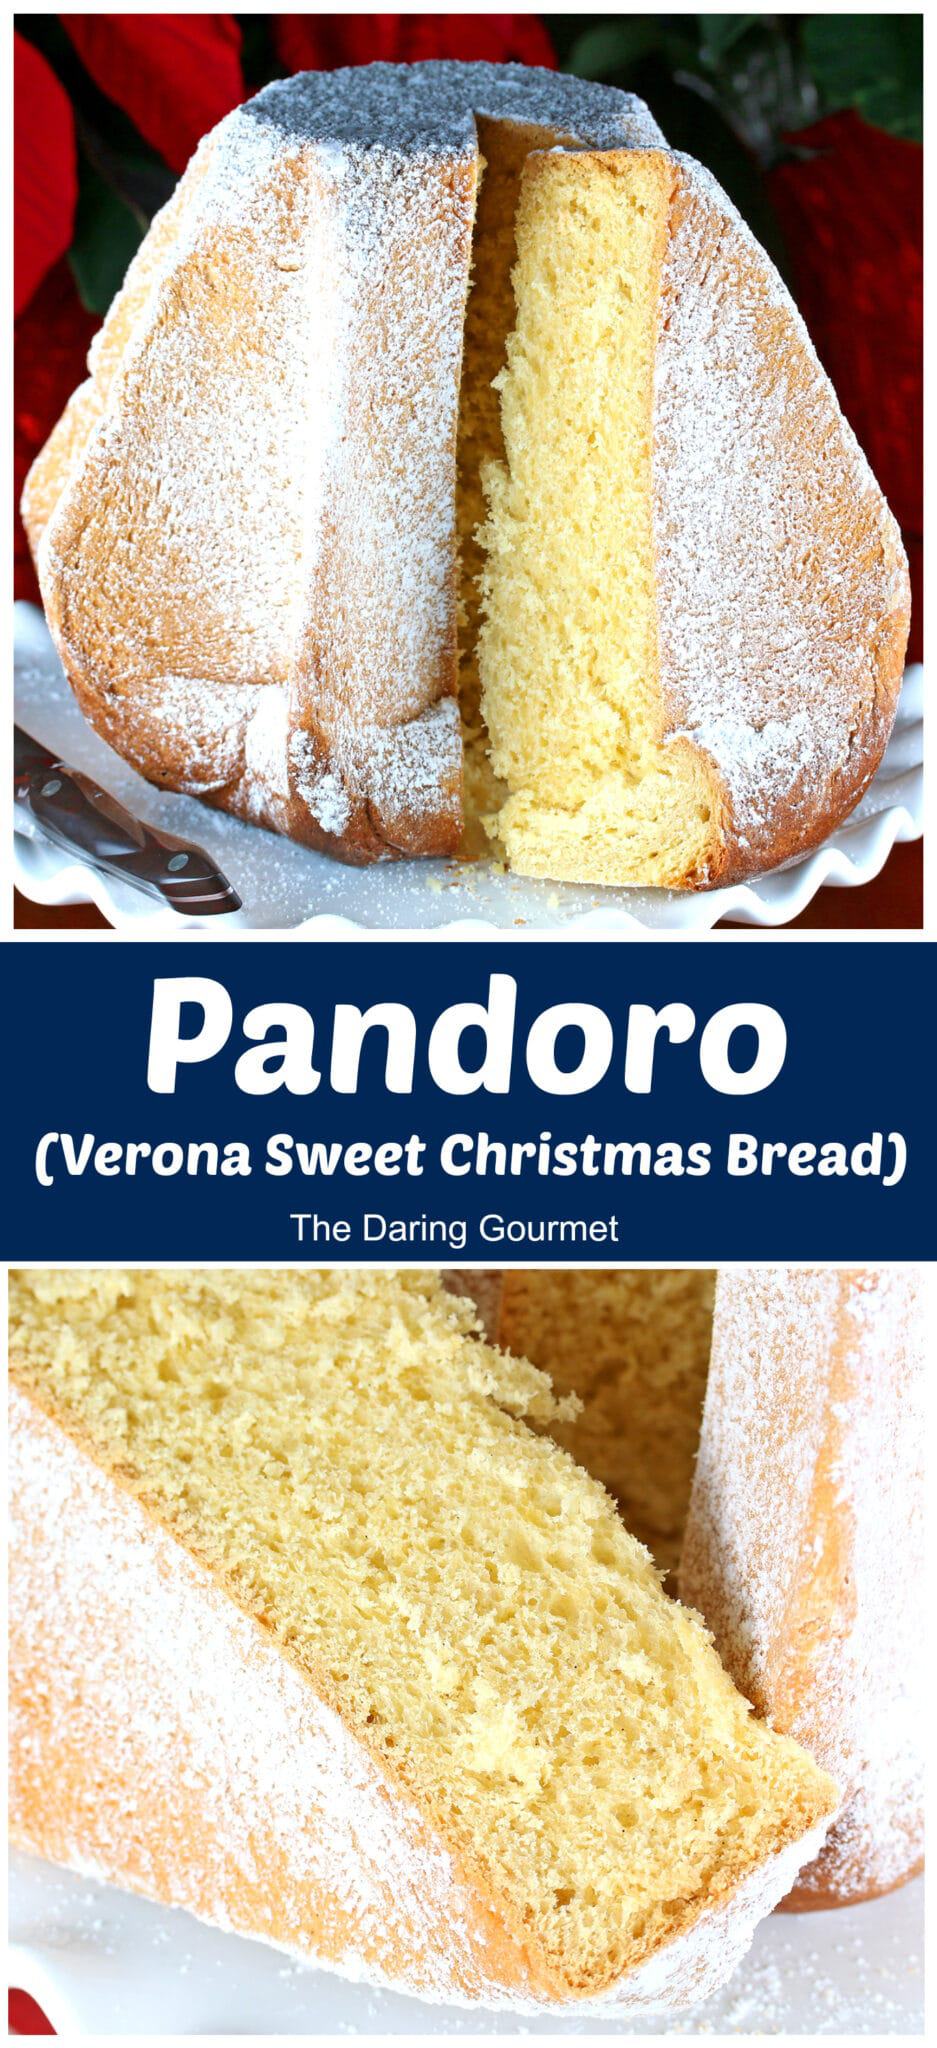 pandoro recipe traditional authentic Verona Christmas bread cake yeast lemon best Italian